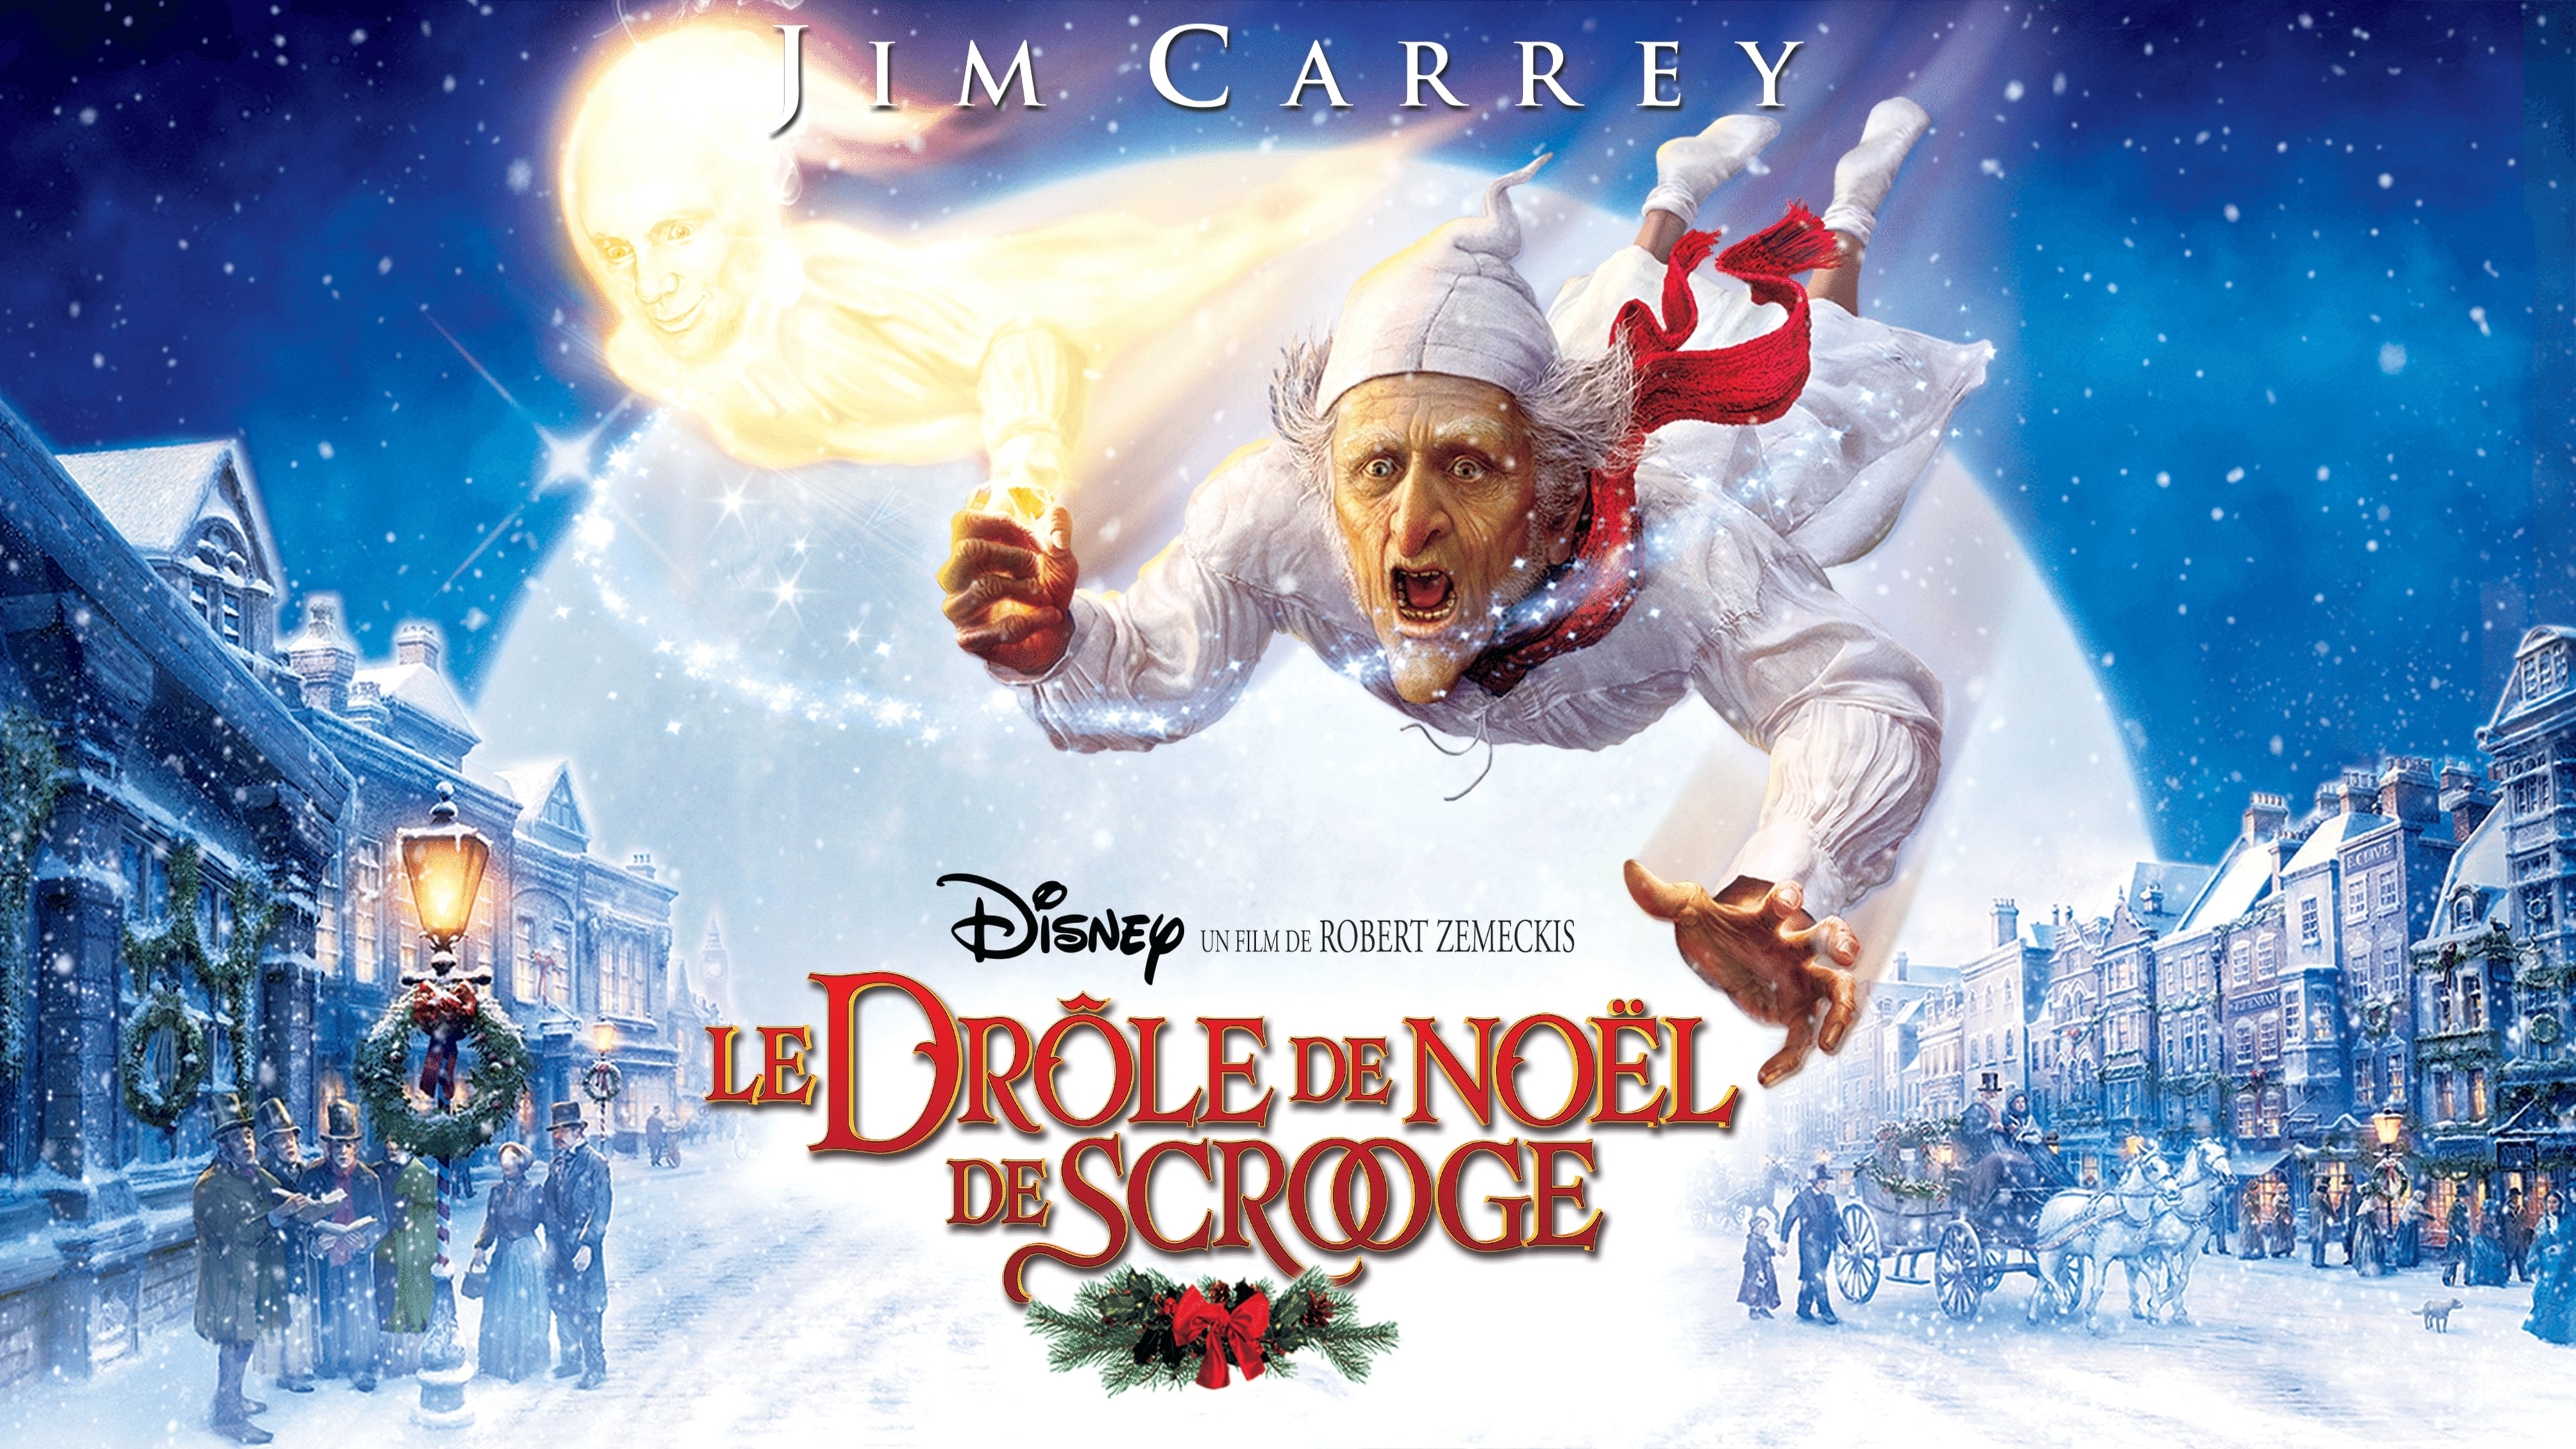 Image du film Le Drôle de Noël de Scrooge lcg7uj6xh4jji2qxzewhllthgqkjpg